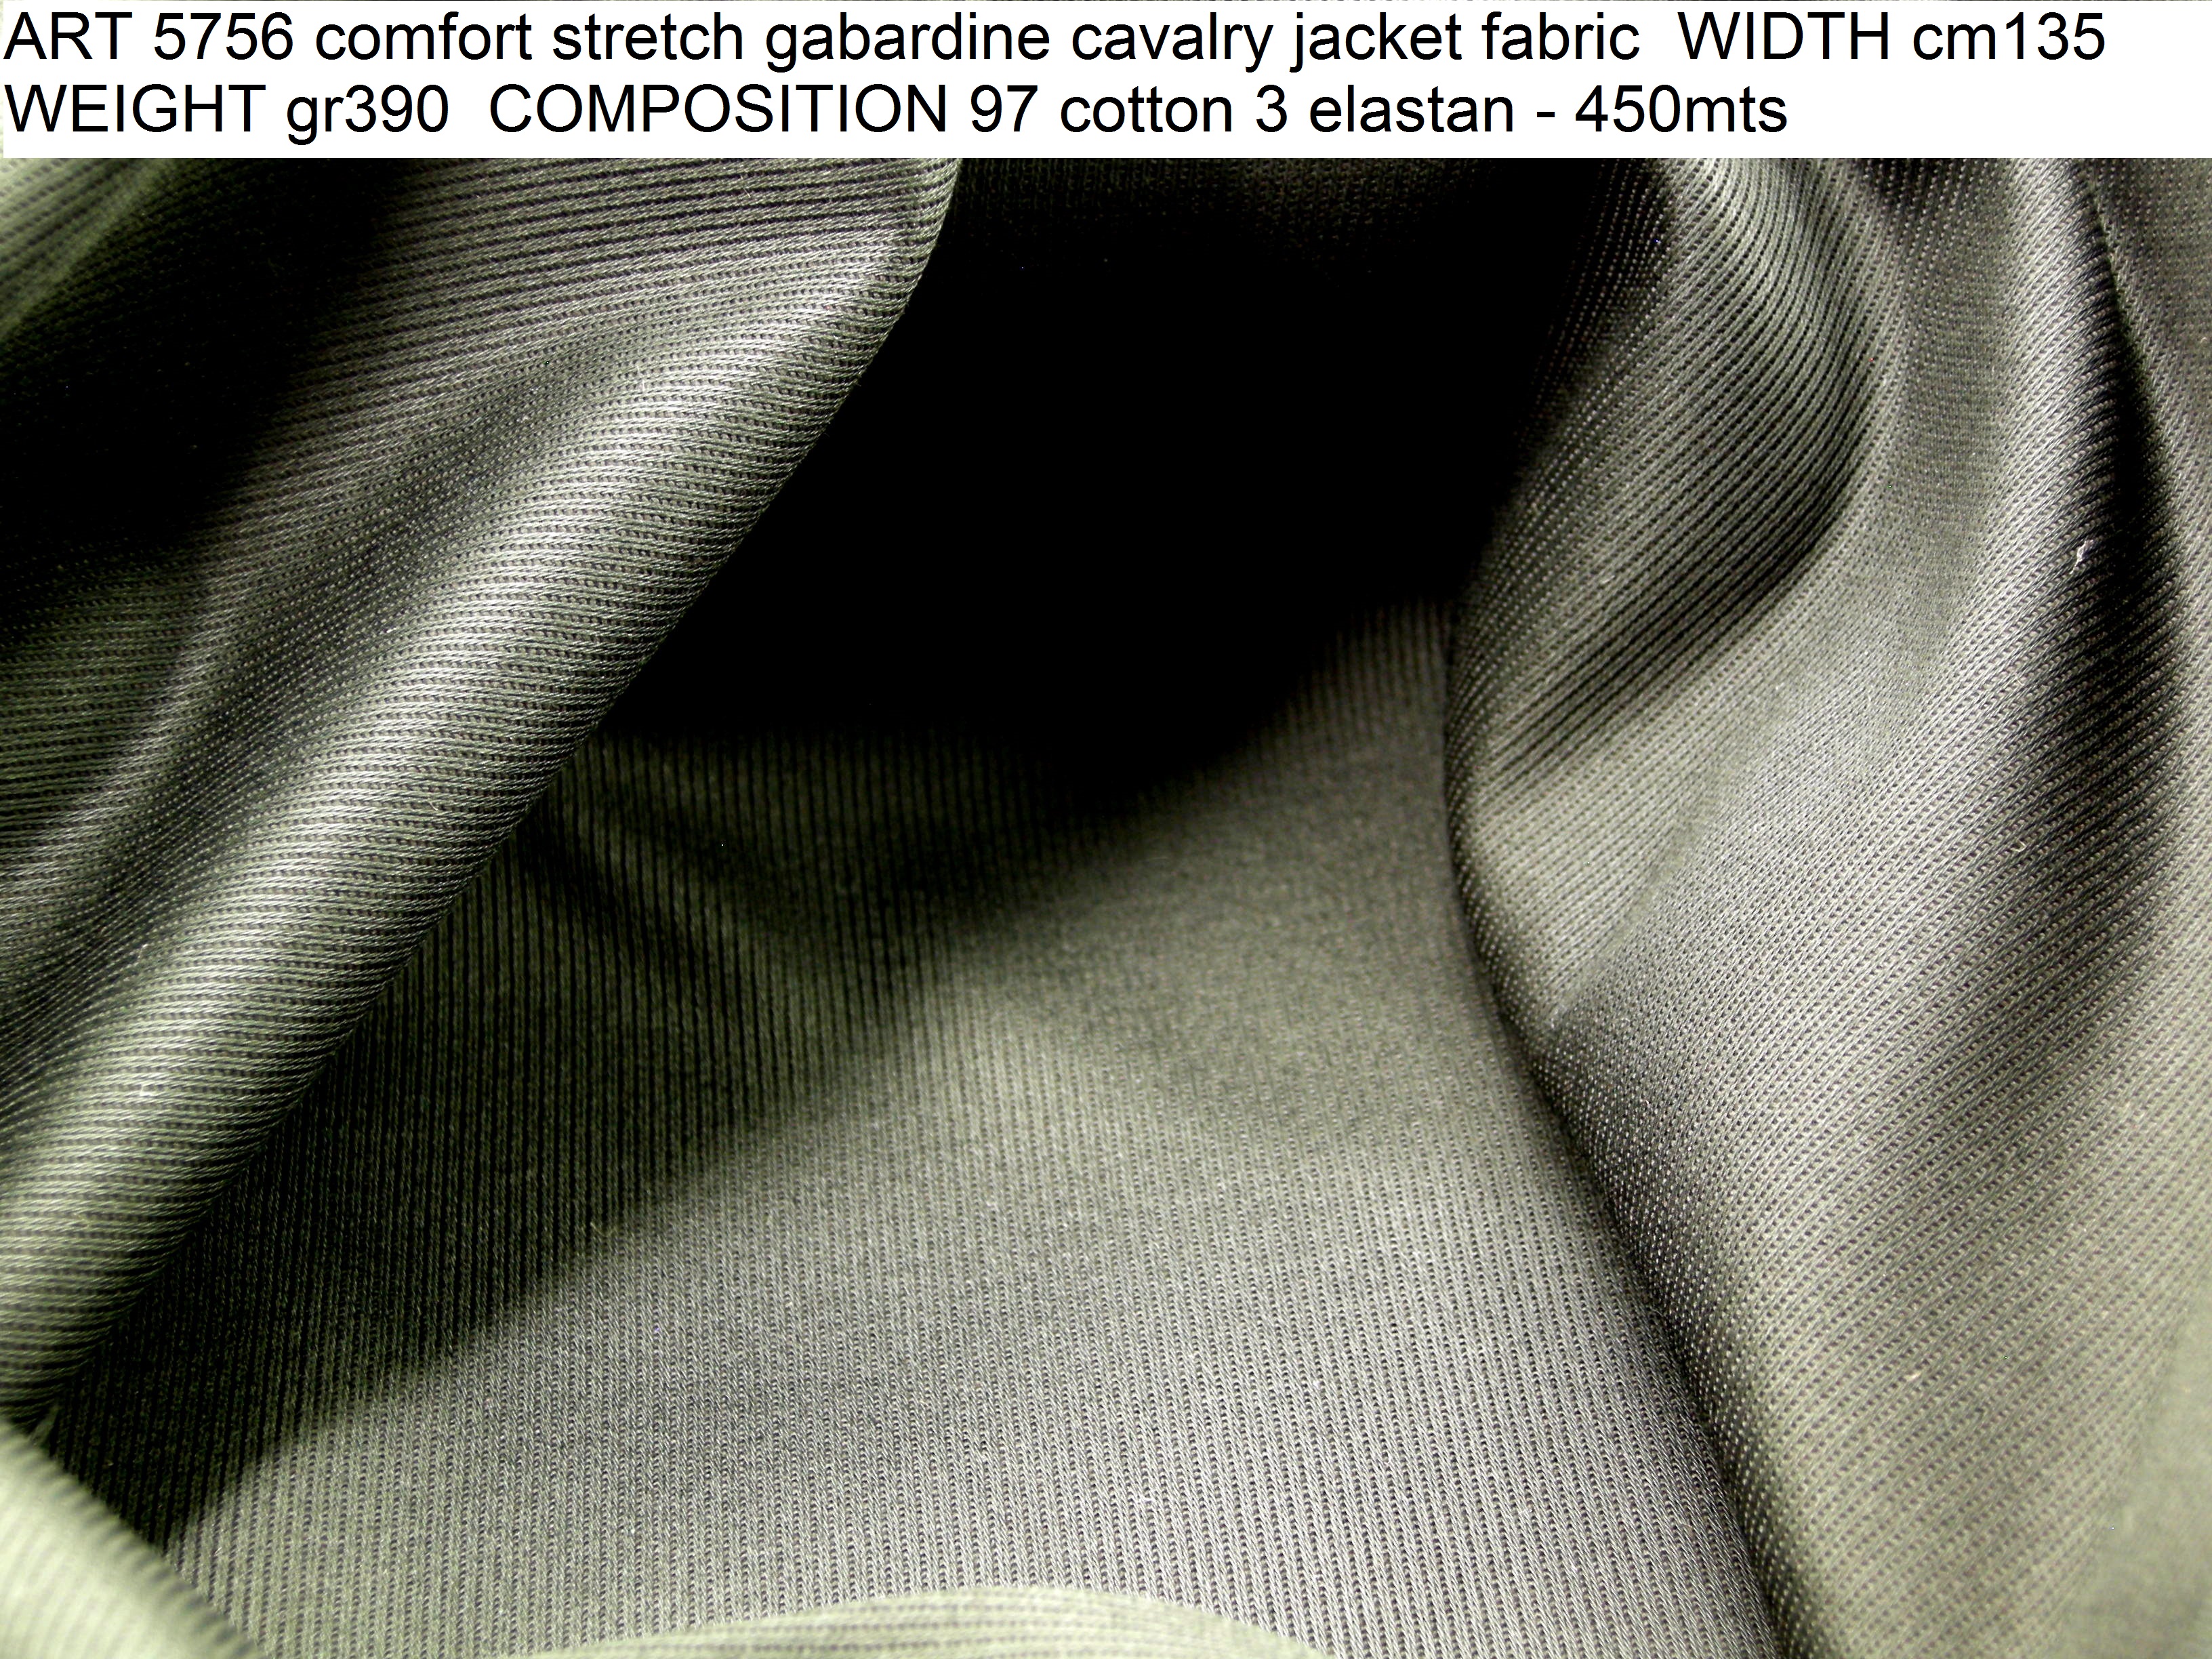 ART 5756 comfort stretch gabardine cavalry jacket fabric WIDTH cm135 WEIGHT gr390 COMPOSITION 97 cotton 3 elastan - 450mts